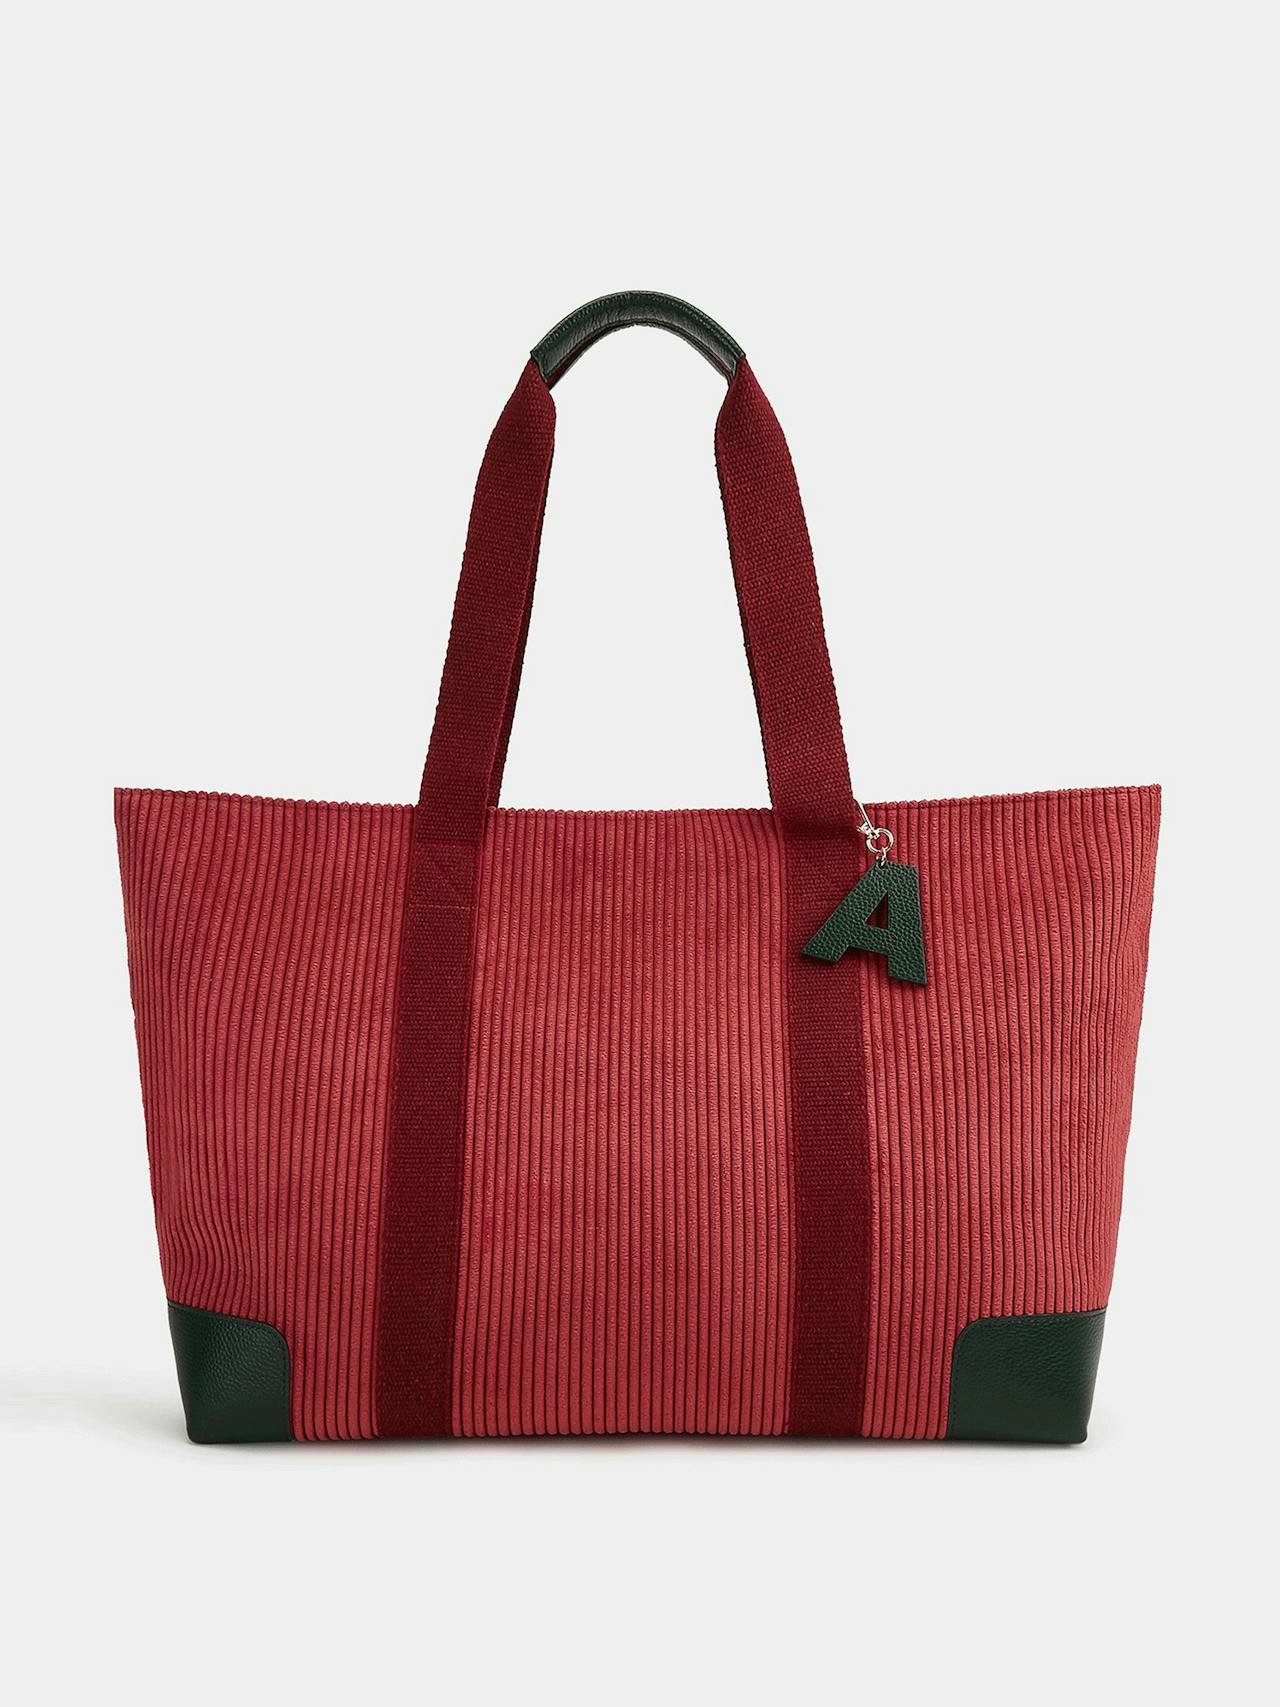 The raspberry baby bag